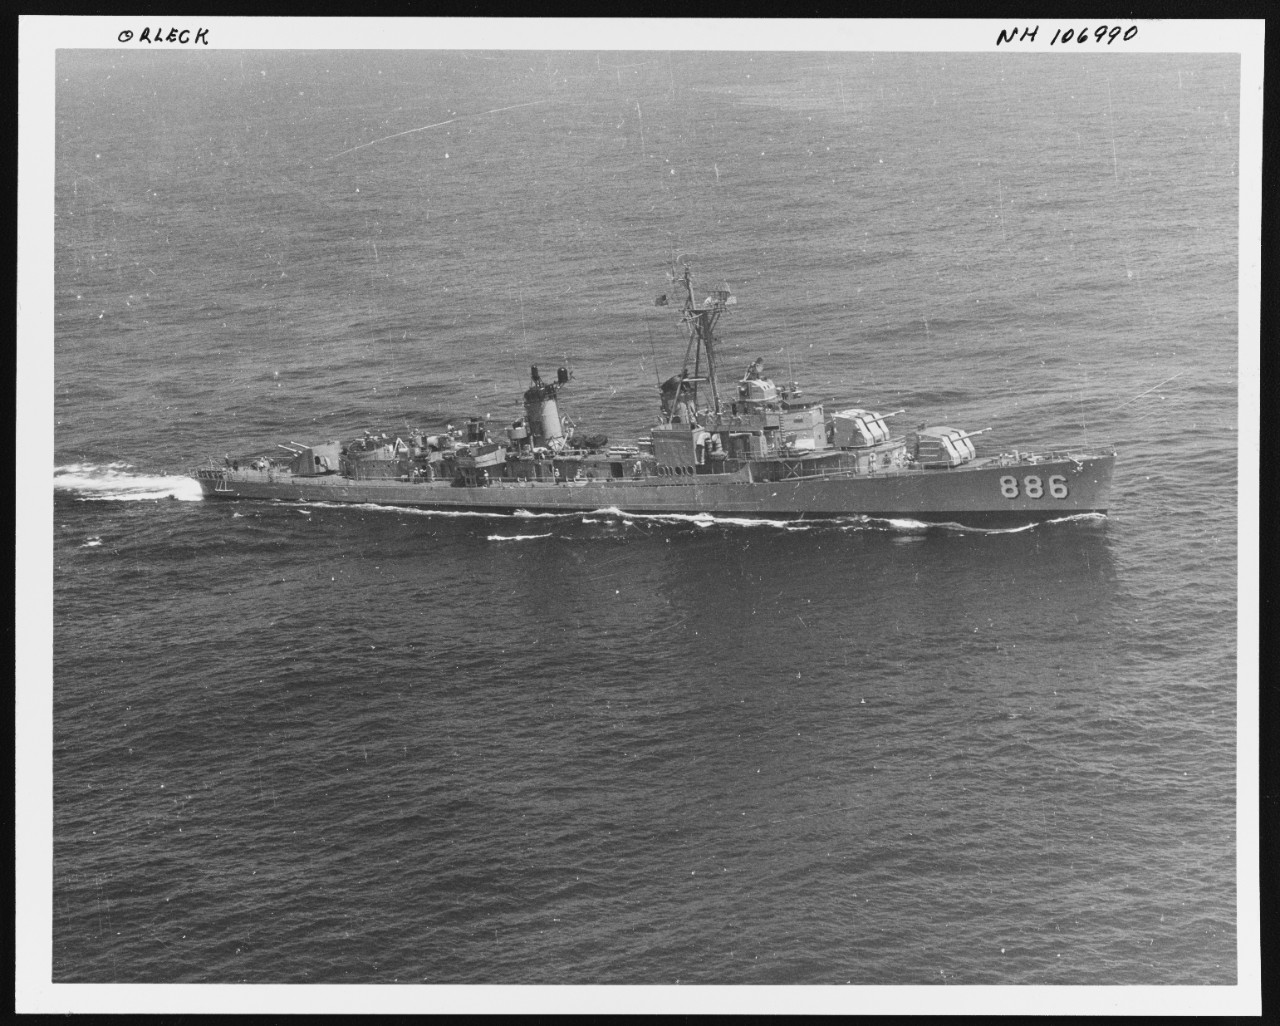 Photo # NH 106990  USS Orleck